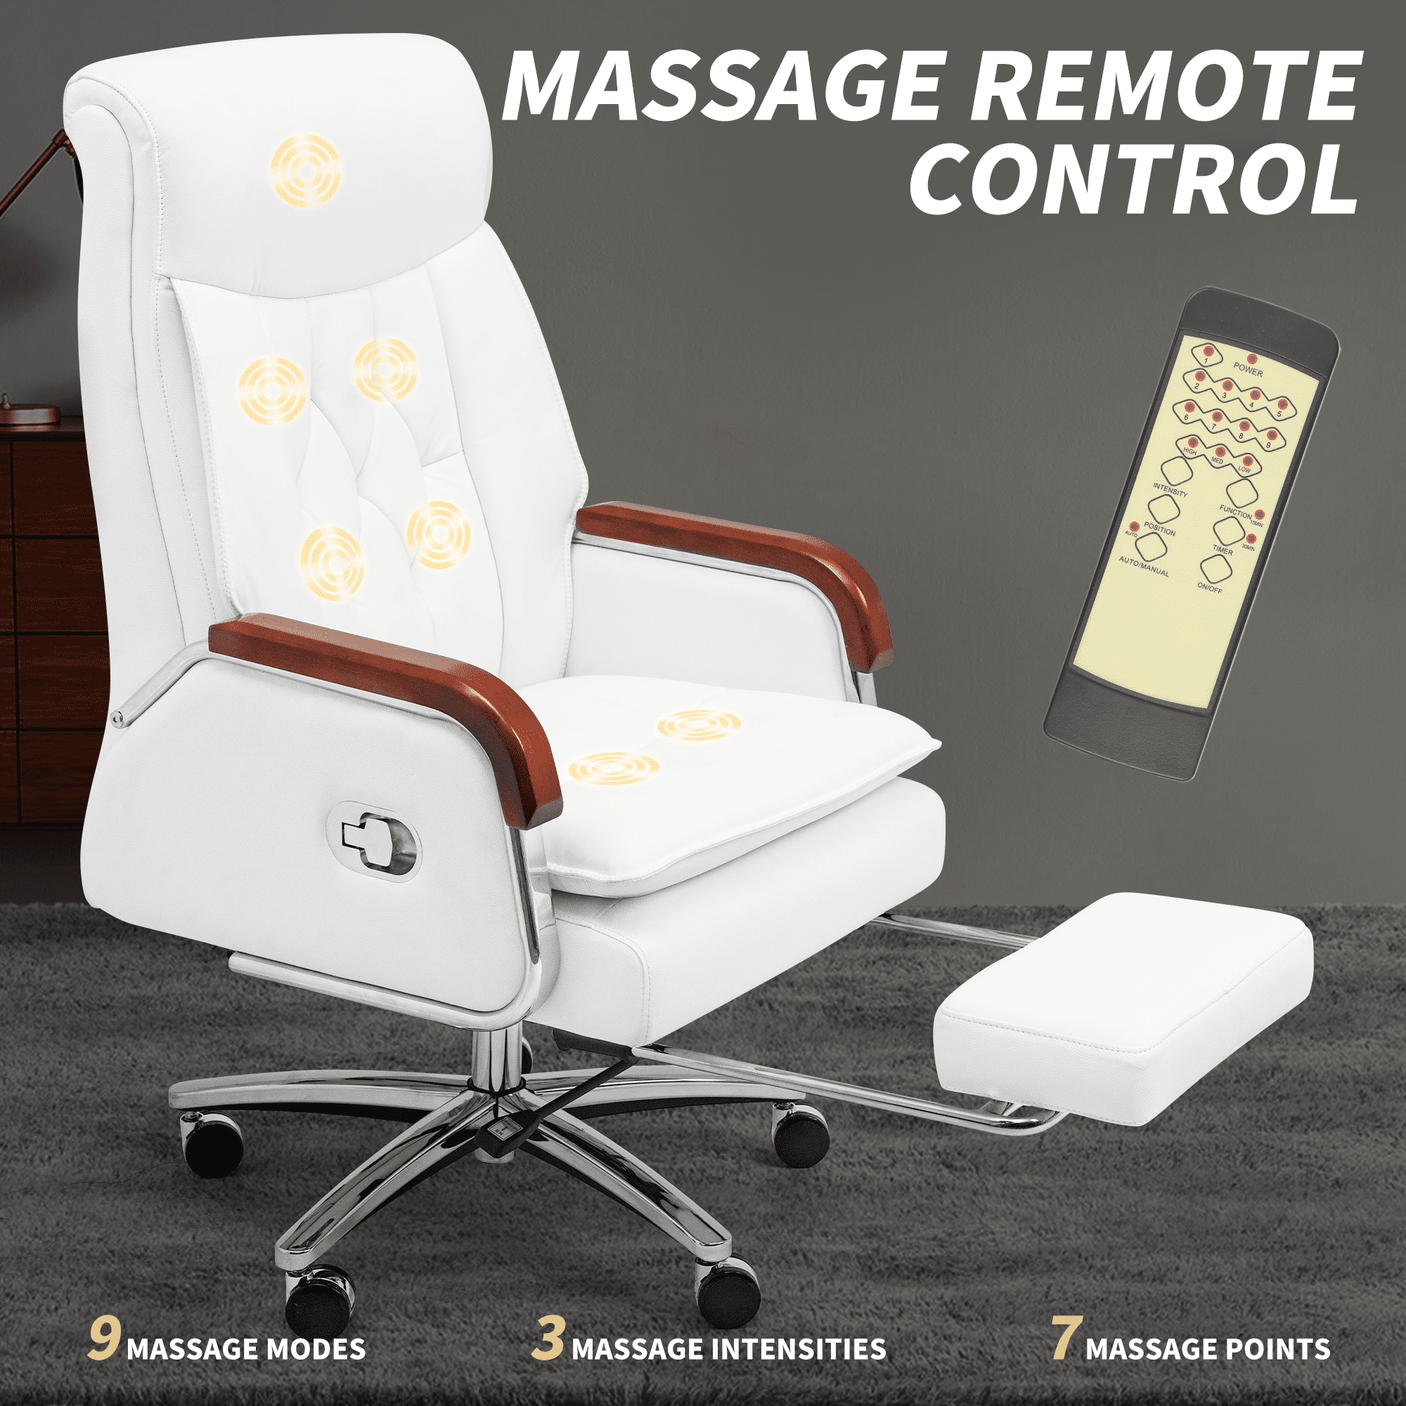 Cameron Massage Office Chair - white - massage control